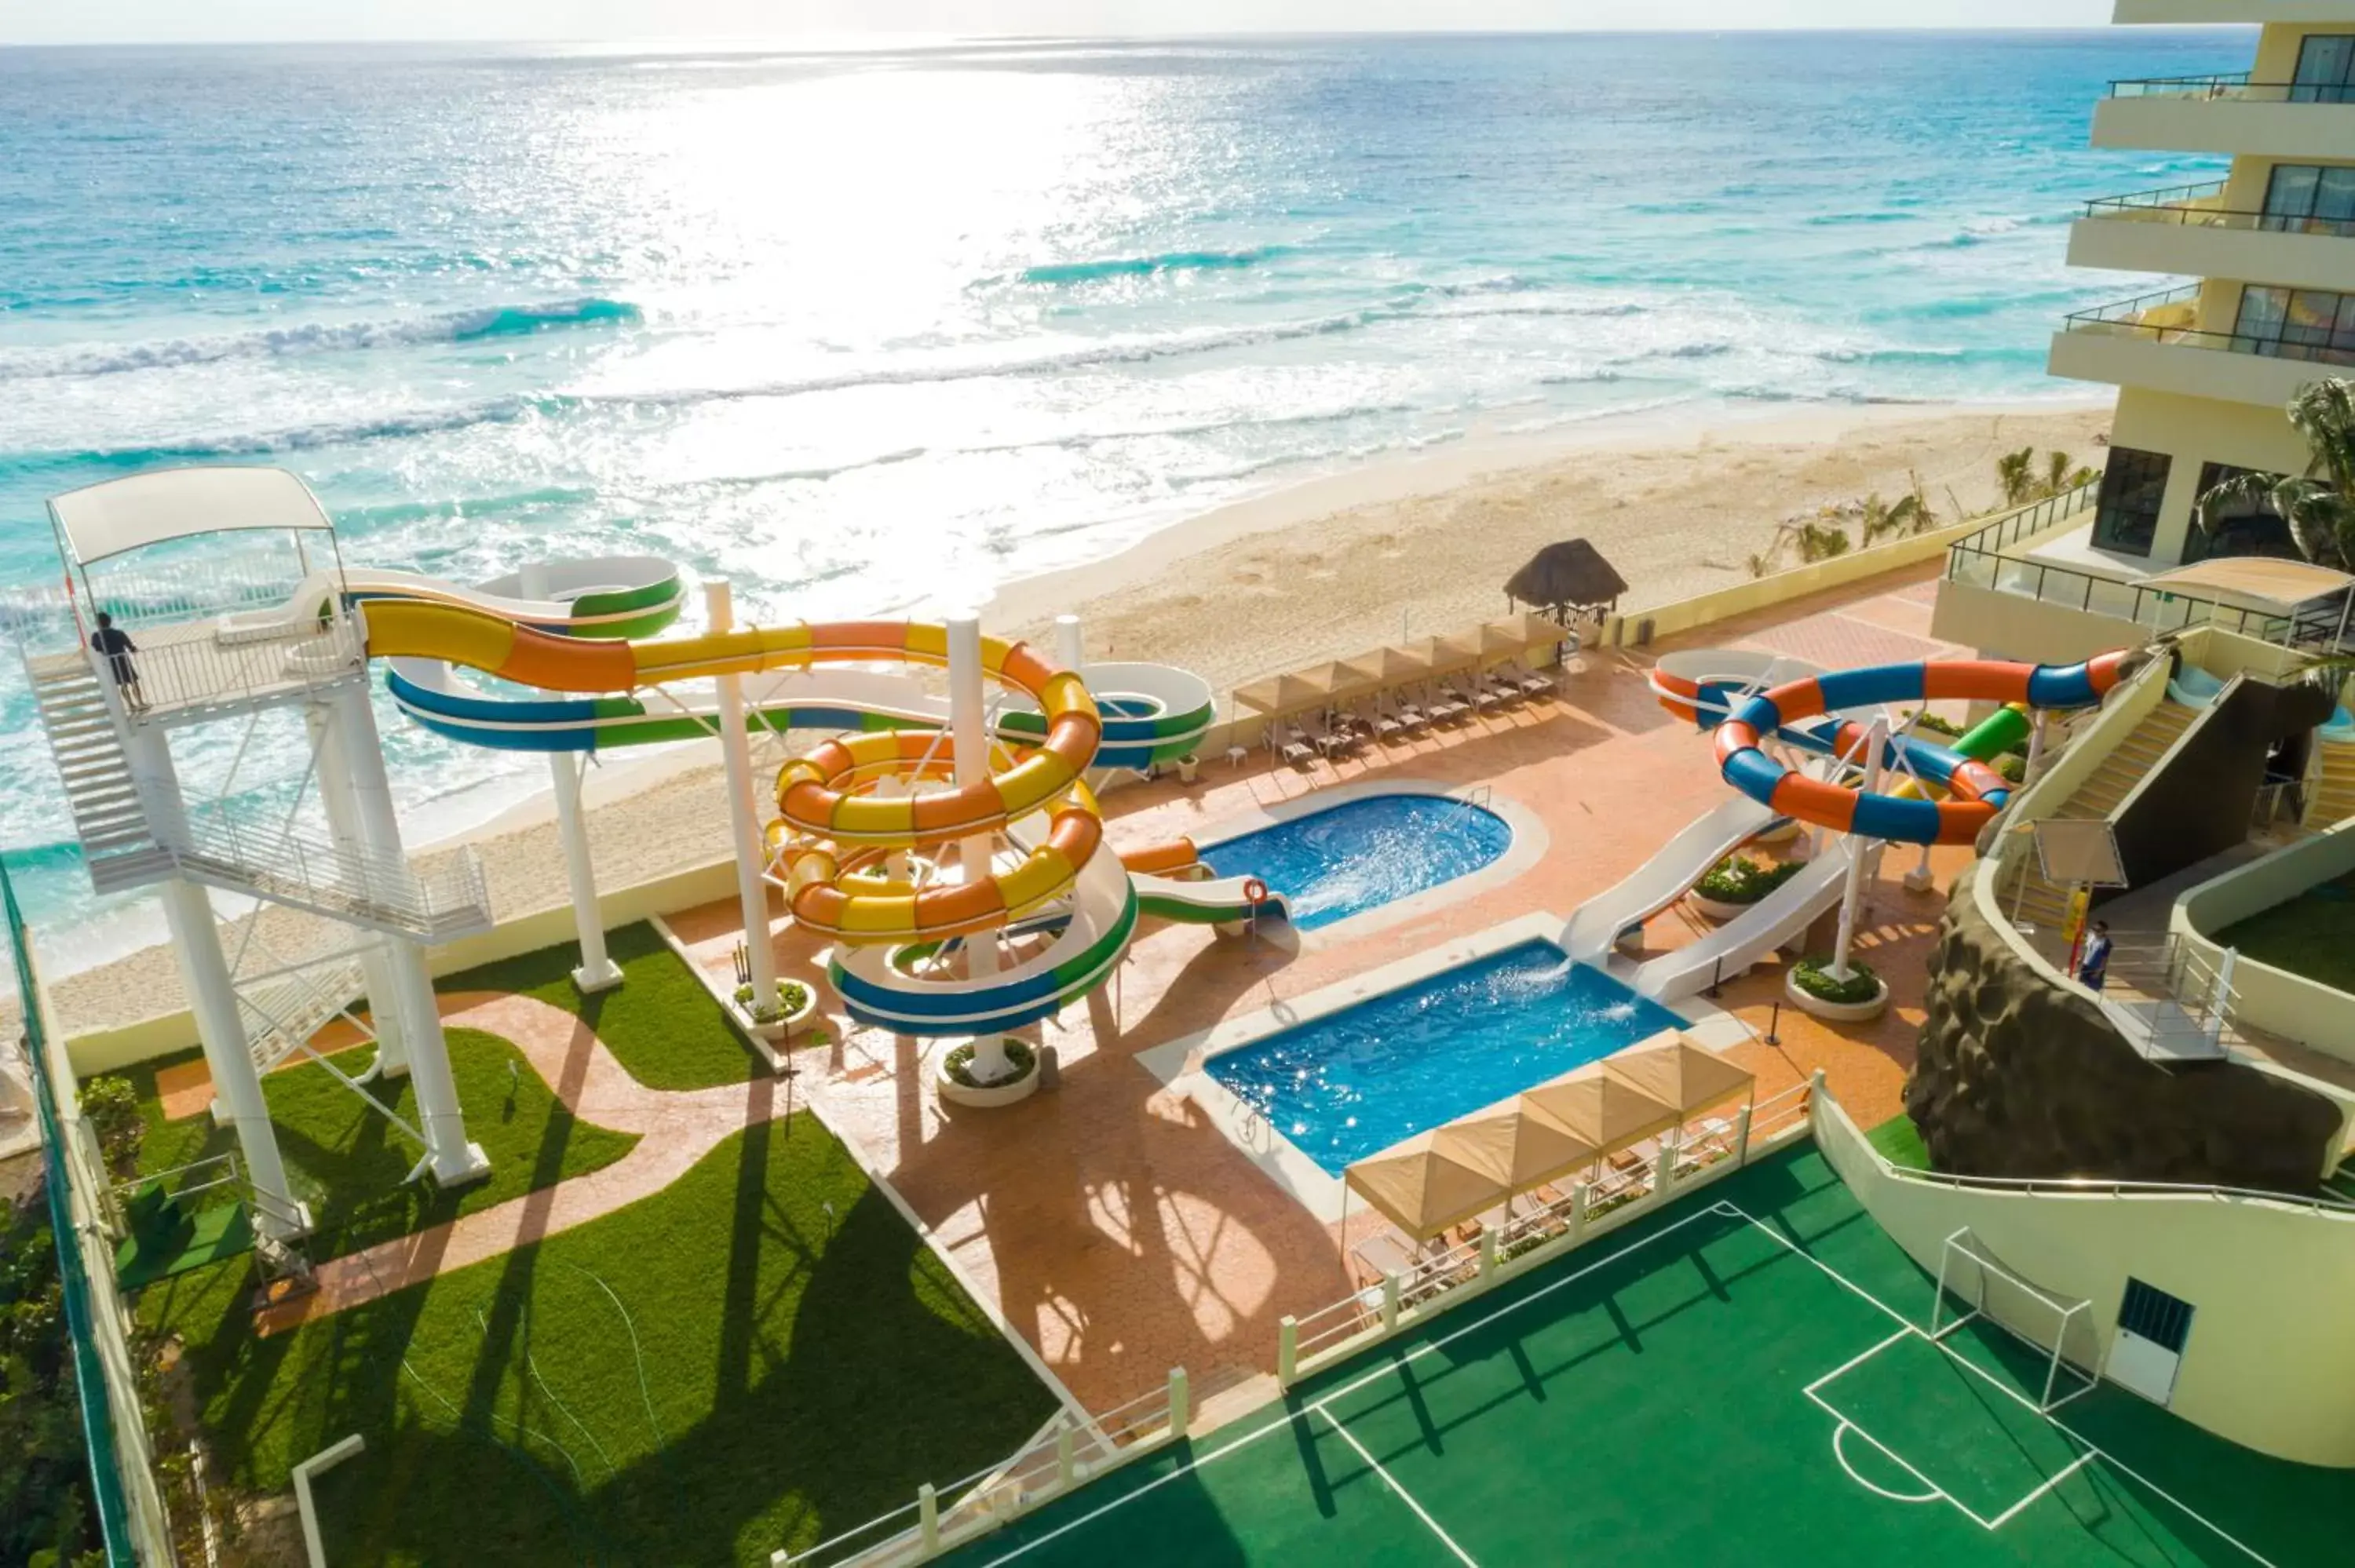 Aqua park, Pool View in Crown Paradise Club Cancun - All Inclusive